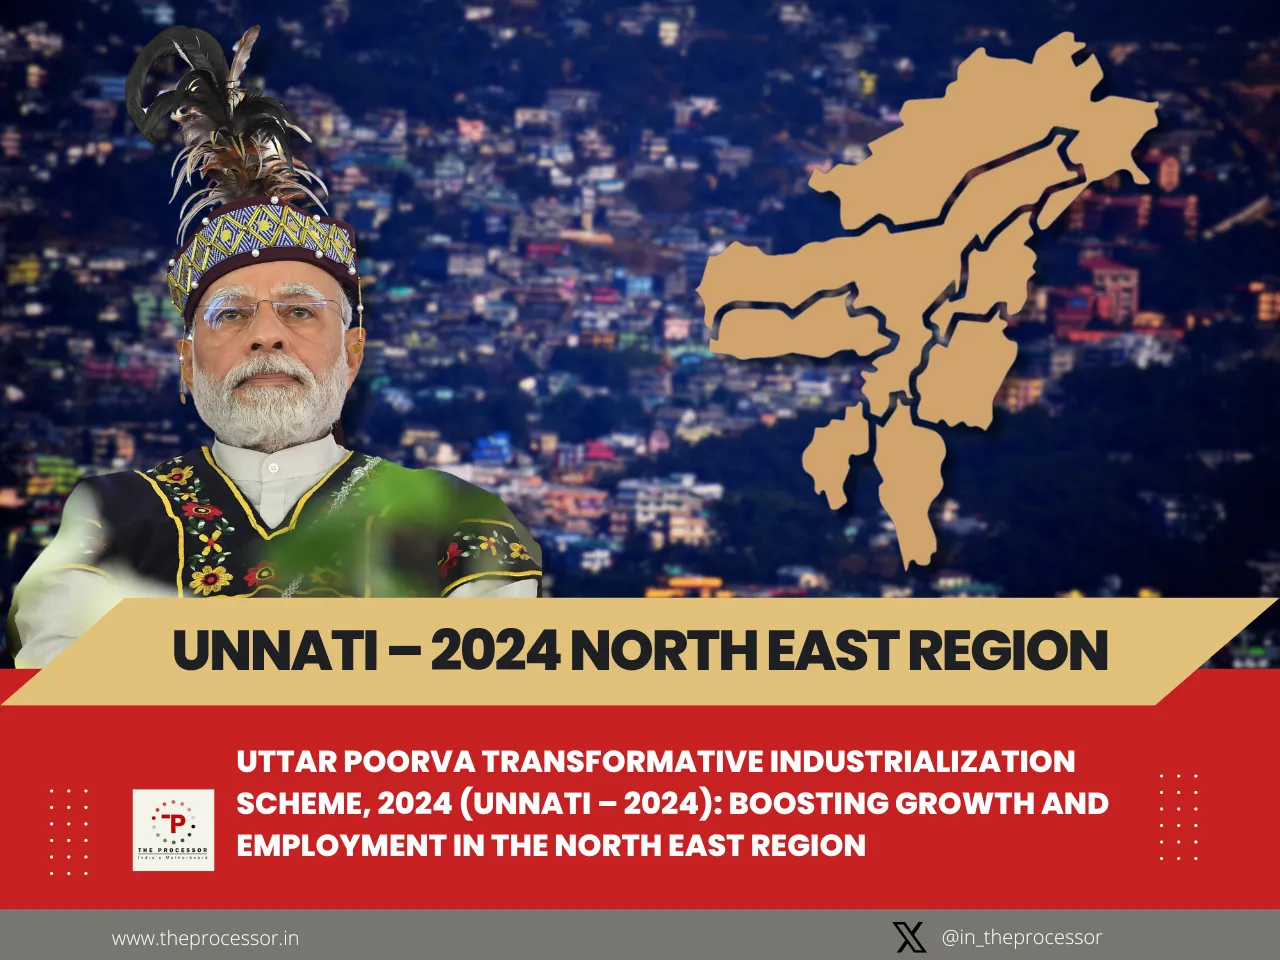 UNNATI – 2024 Scheme: PM Modi's new gift for Northeast India